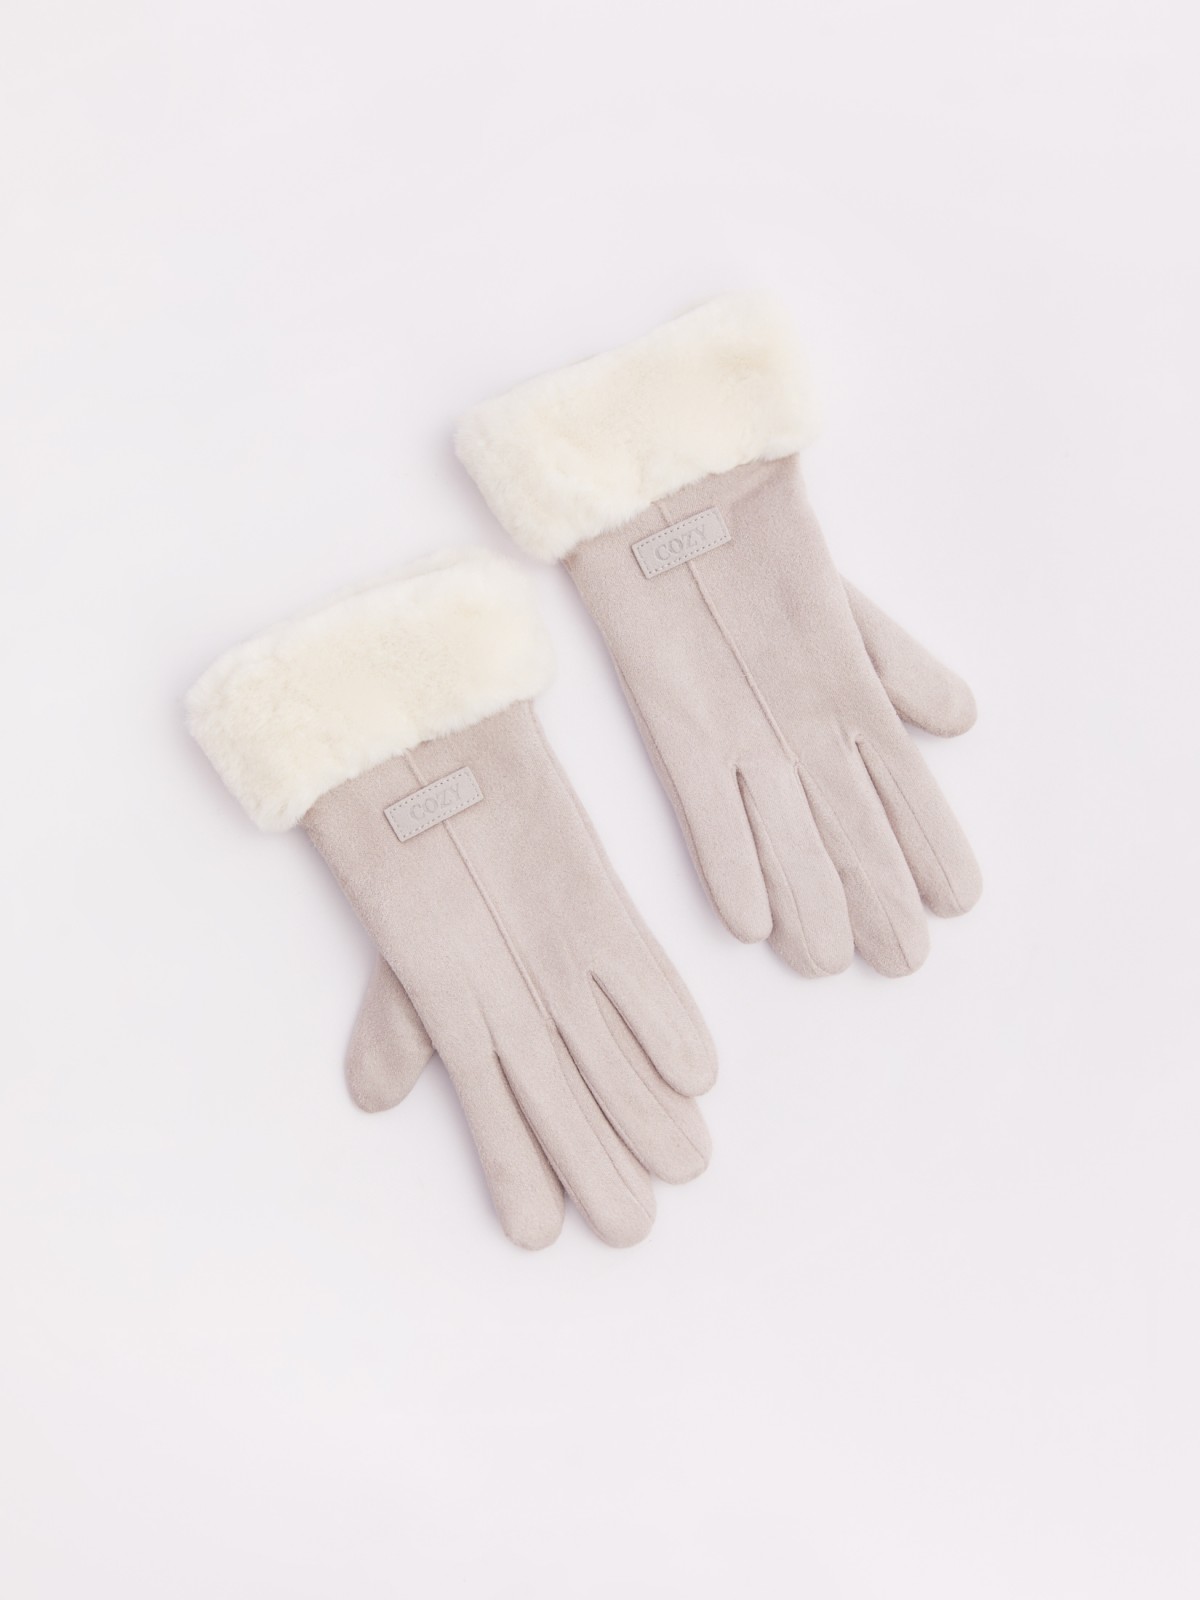 Тёплые замшевые перчатки с функцией Touch Screen zolla 023429659015, цвет серый, размер S - фото 4